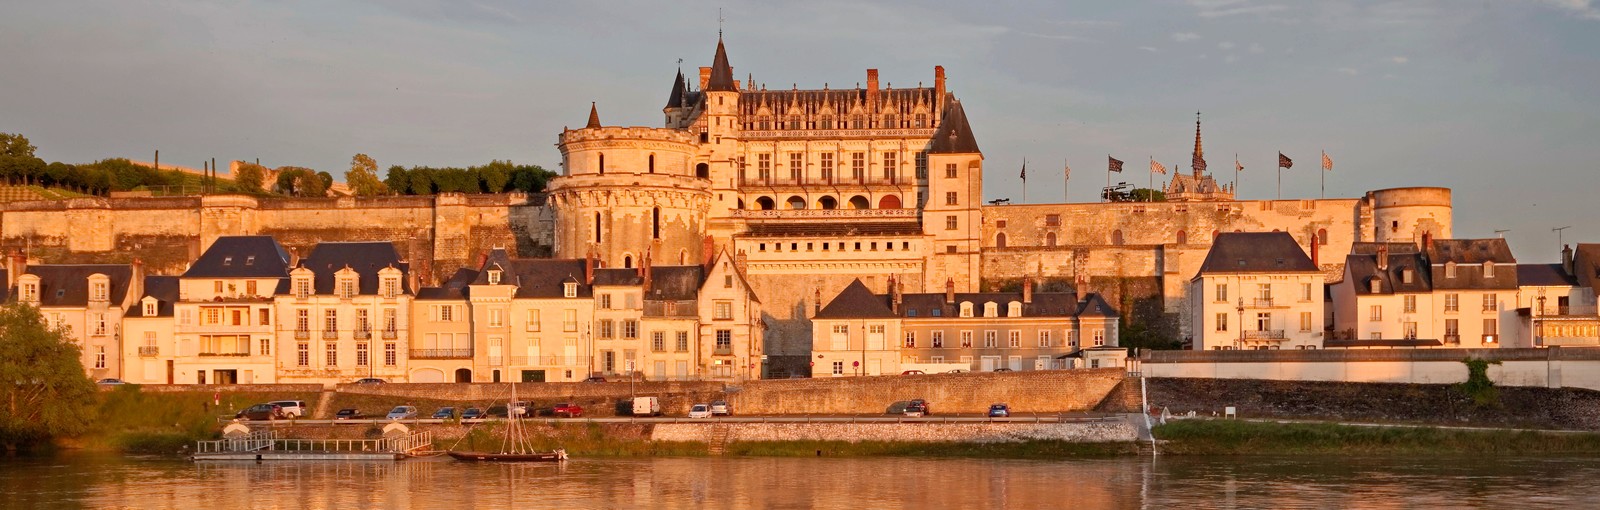 Tours 卢瓦尔河城堡-诺曼底 - 法国多个地区 - 从巴黎出发的多日游